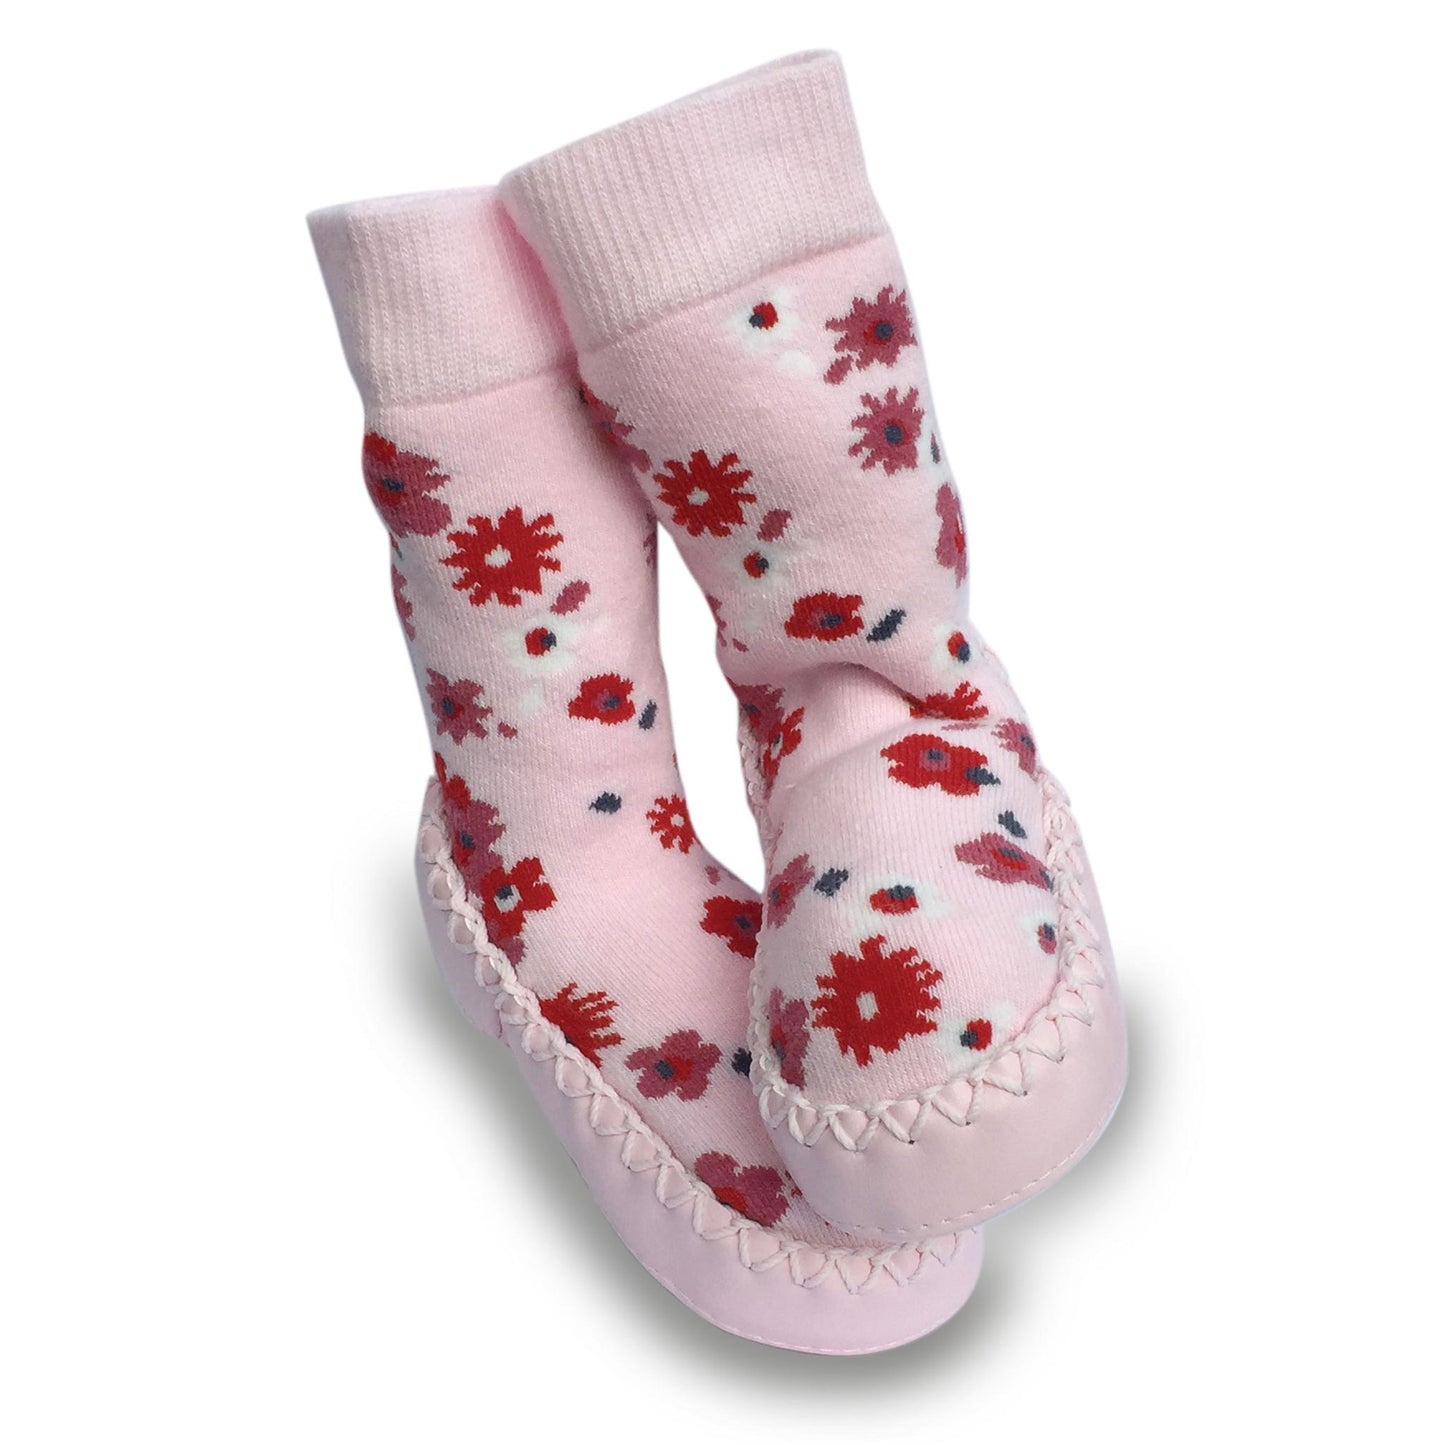 Mocc Ons Slipper Socks (Floral Ditsy)